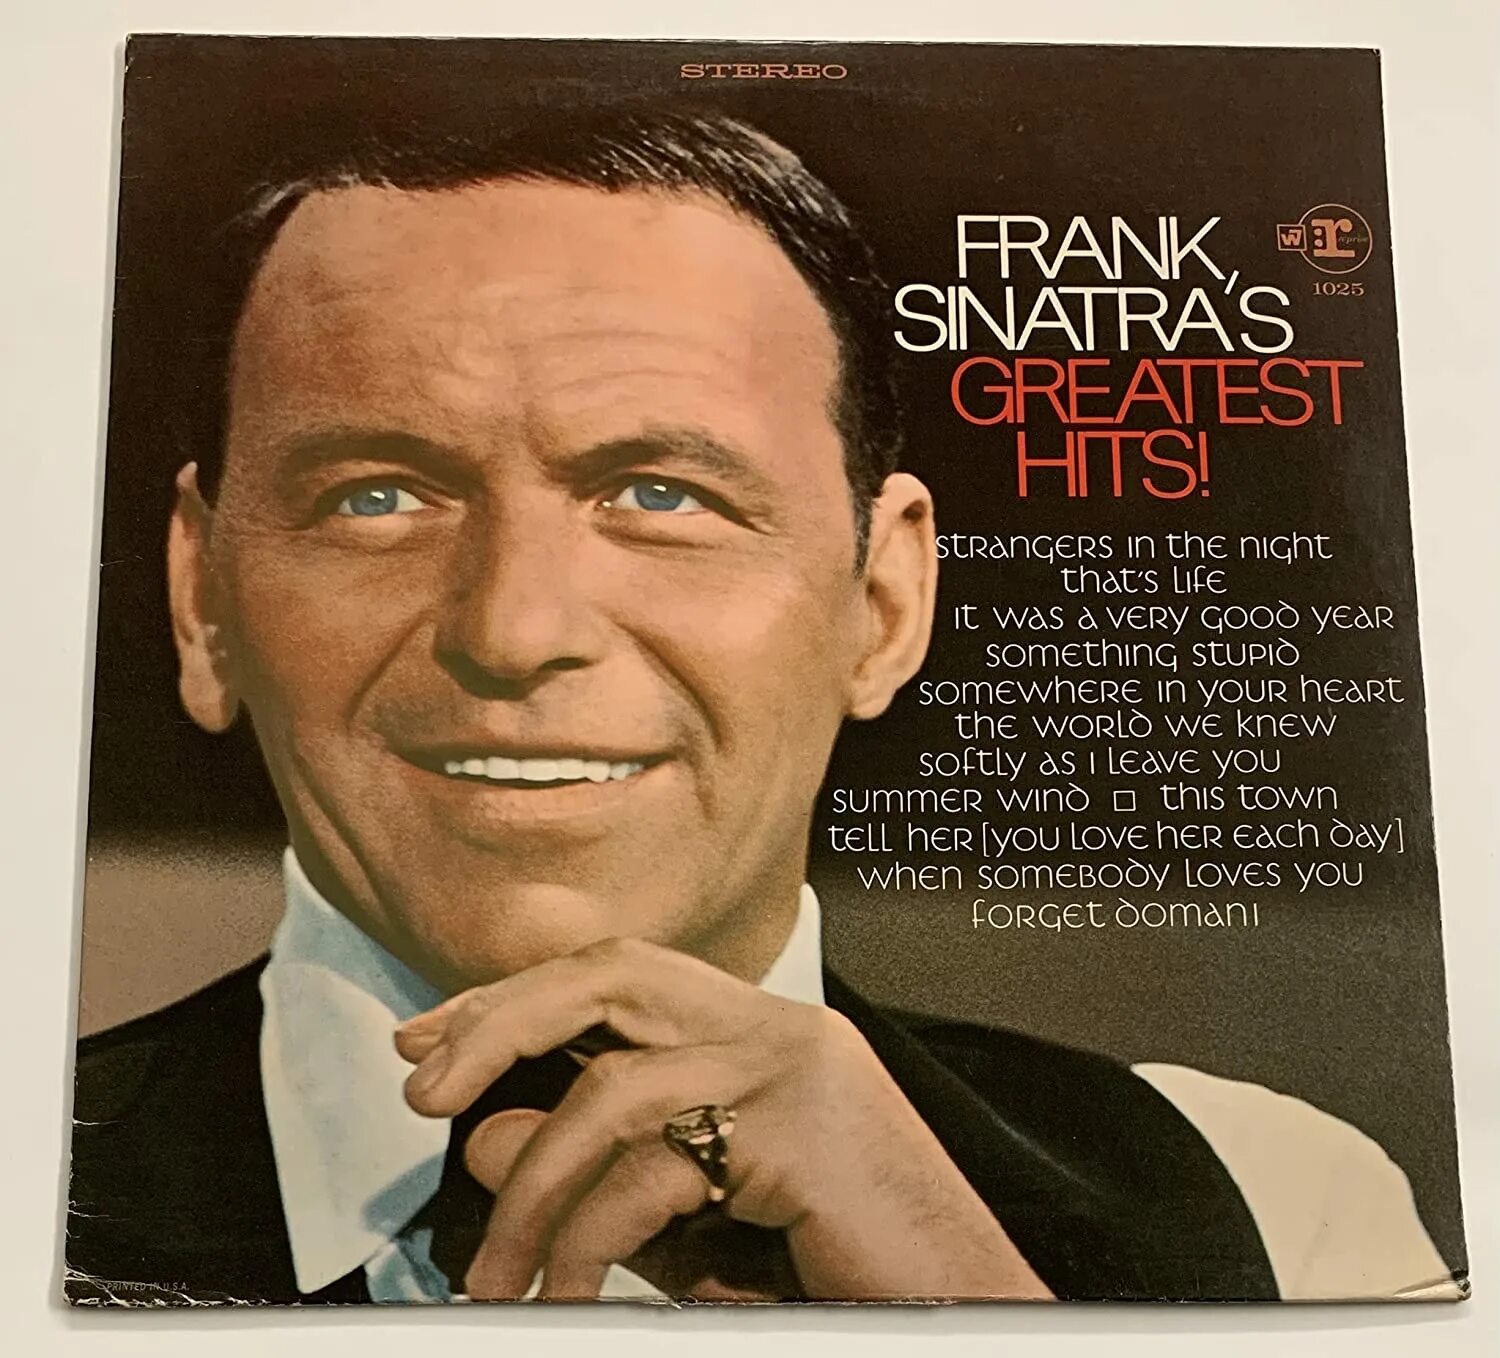 Фрэнк синатра хиты. Frank Sinatra Greatest Hits пластинка. Frank Sinatra 1990. Часы Frank Sinatra. Фрэнк Синатра песни.